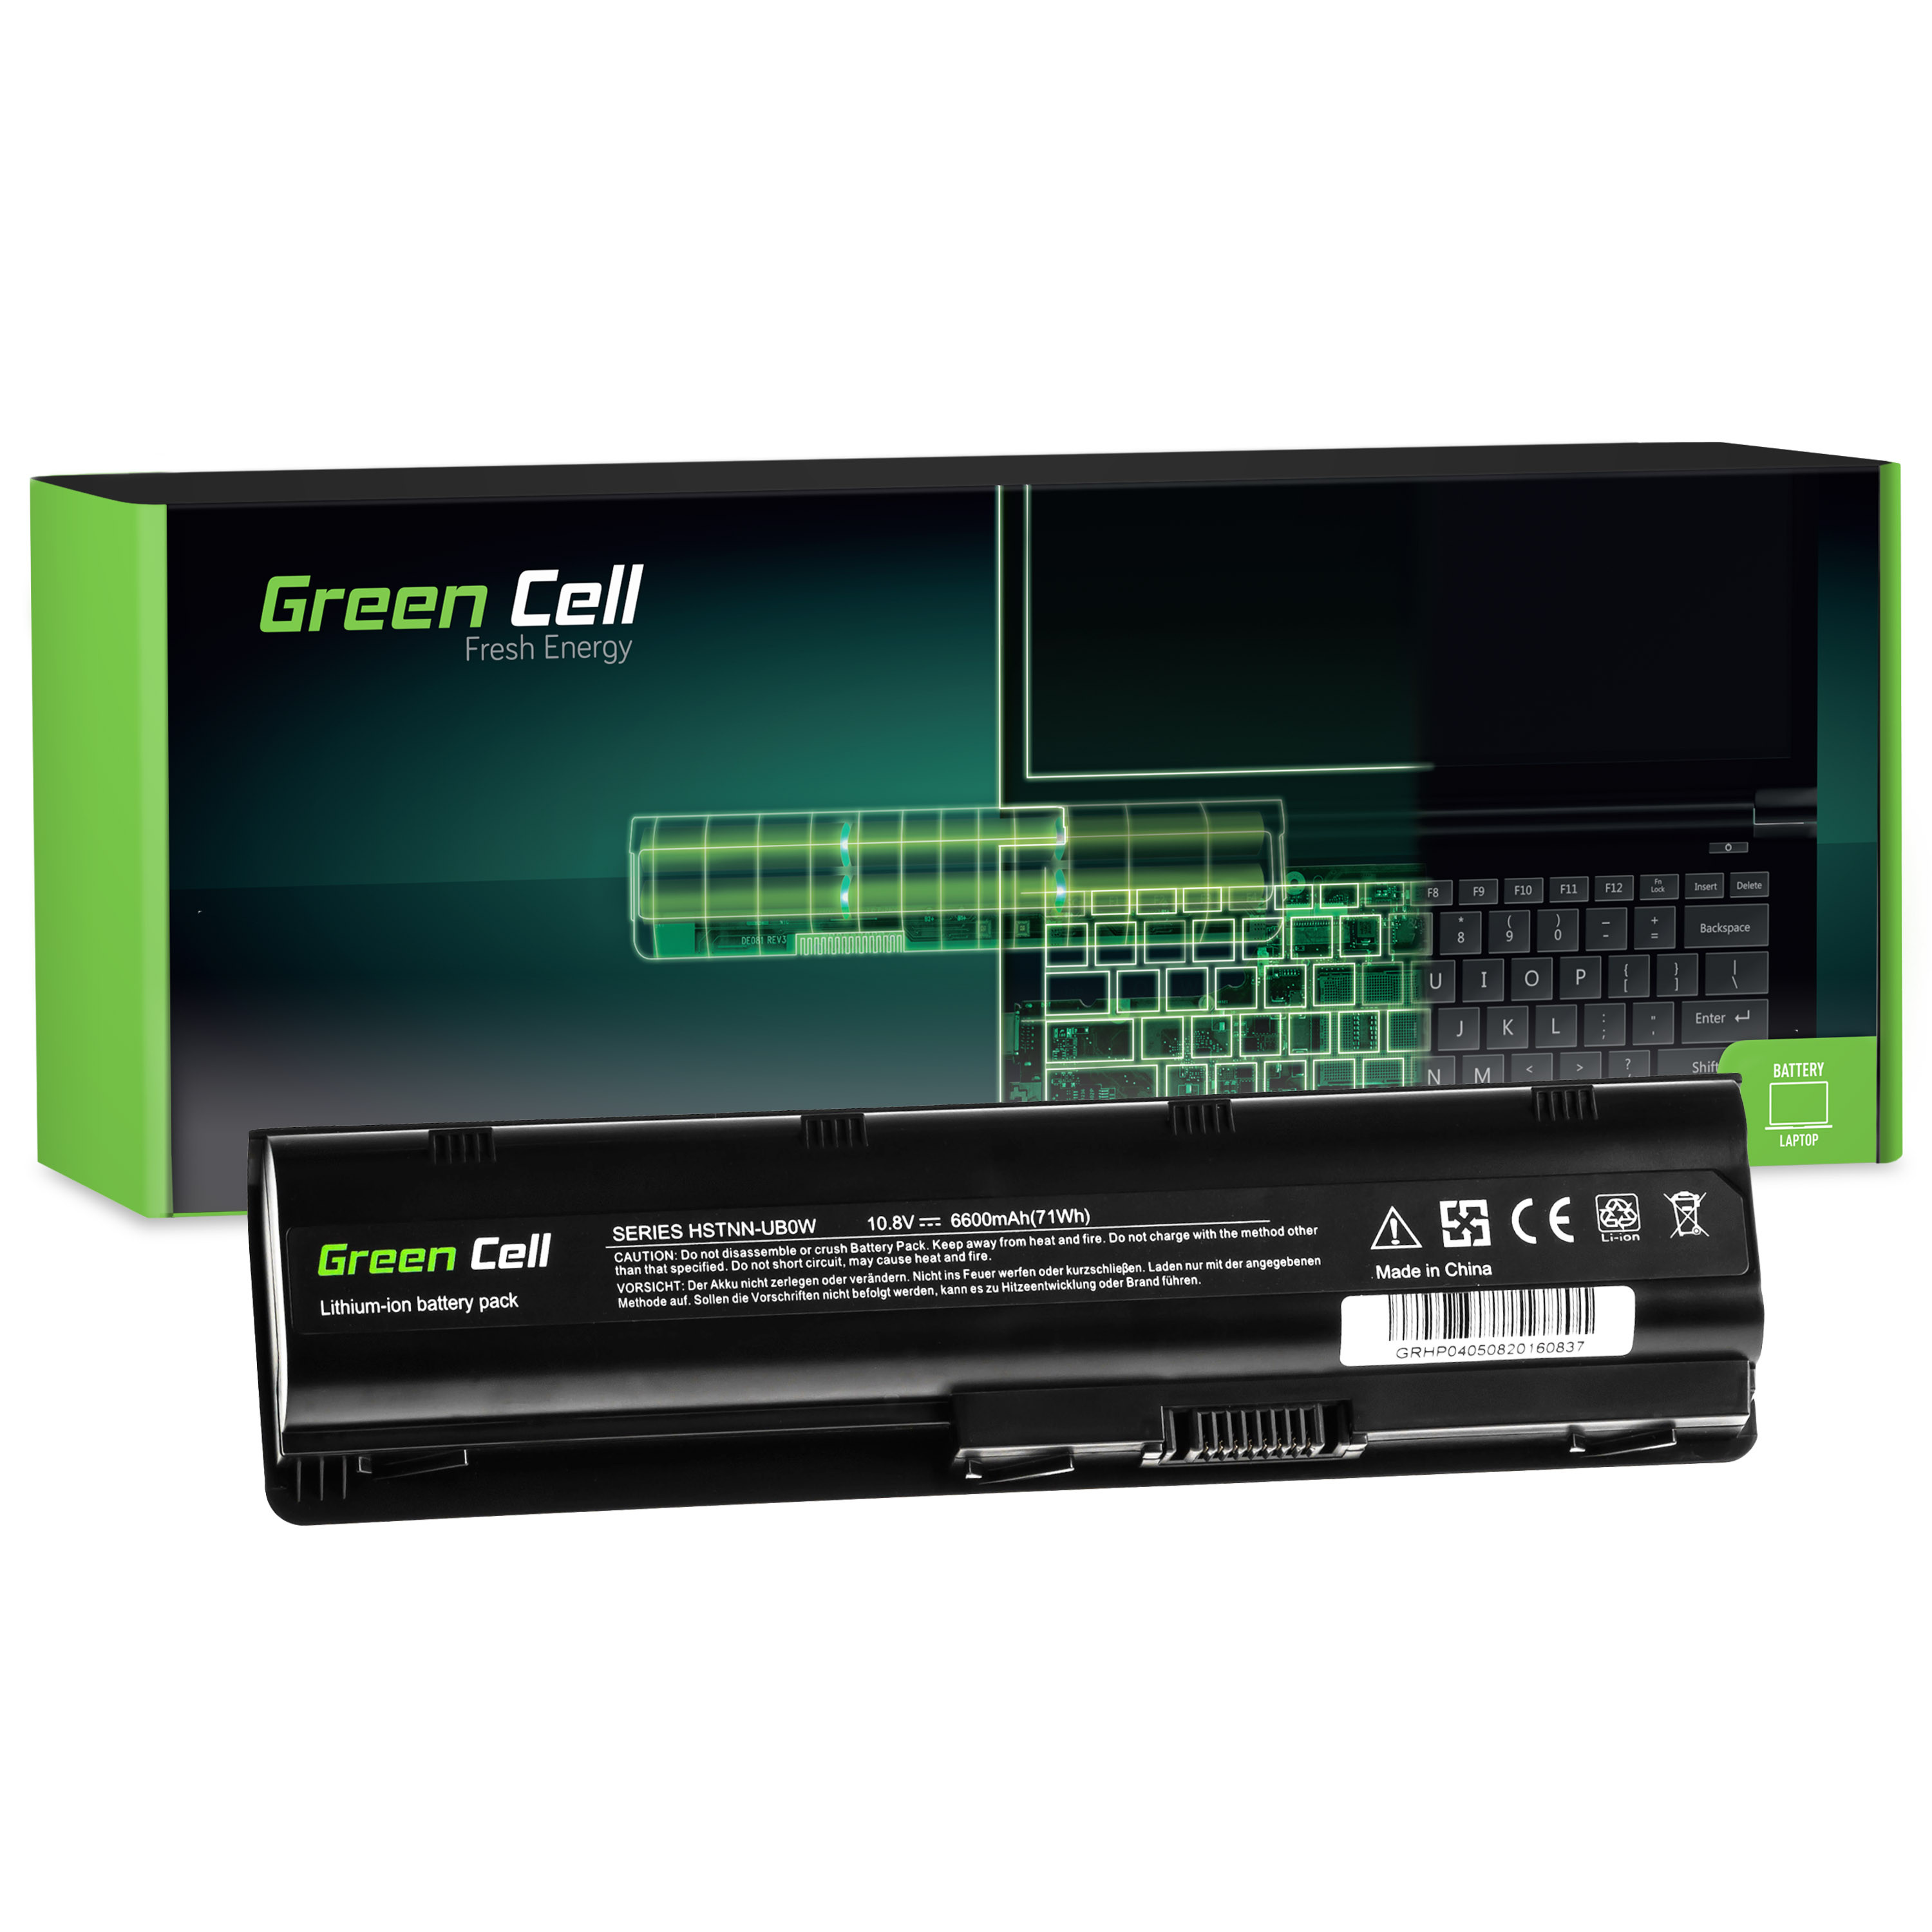 *Green Cell HP04 Baterie HP Envy 17 G32 G42 G56 G62 G72 CQ42 CQ56 MU06 DM4 6600mAh Li-ion